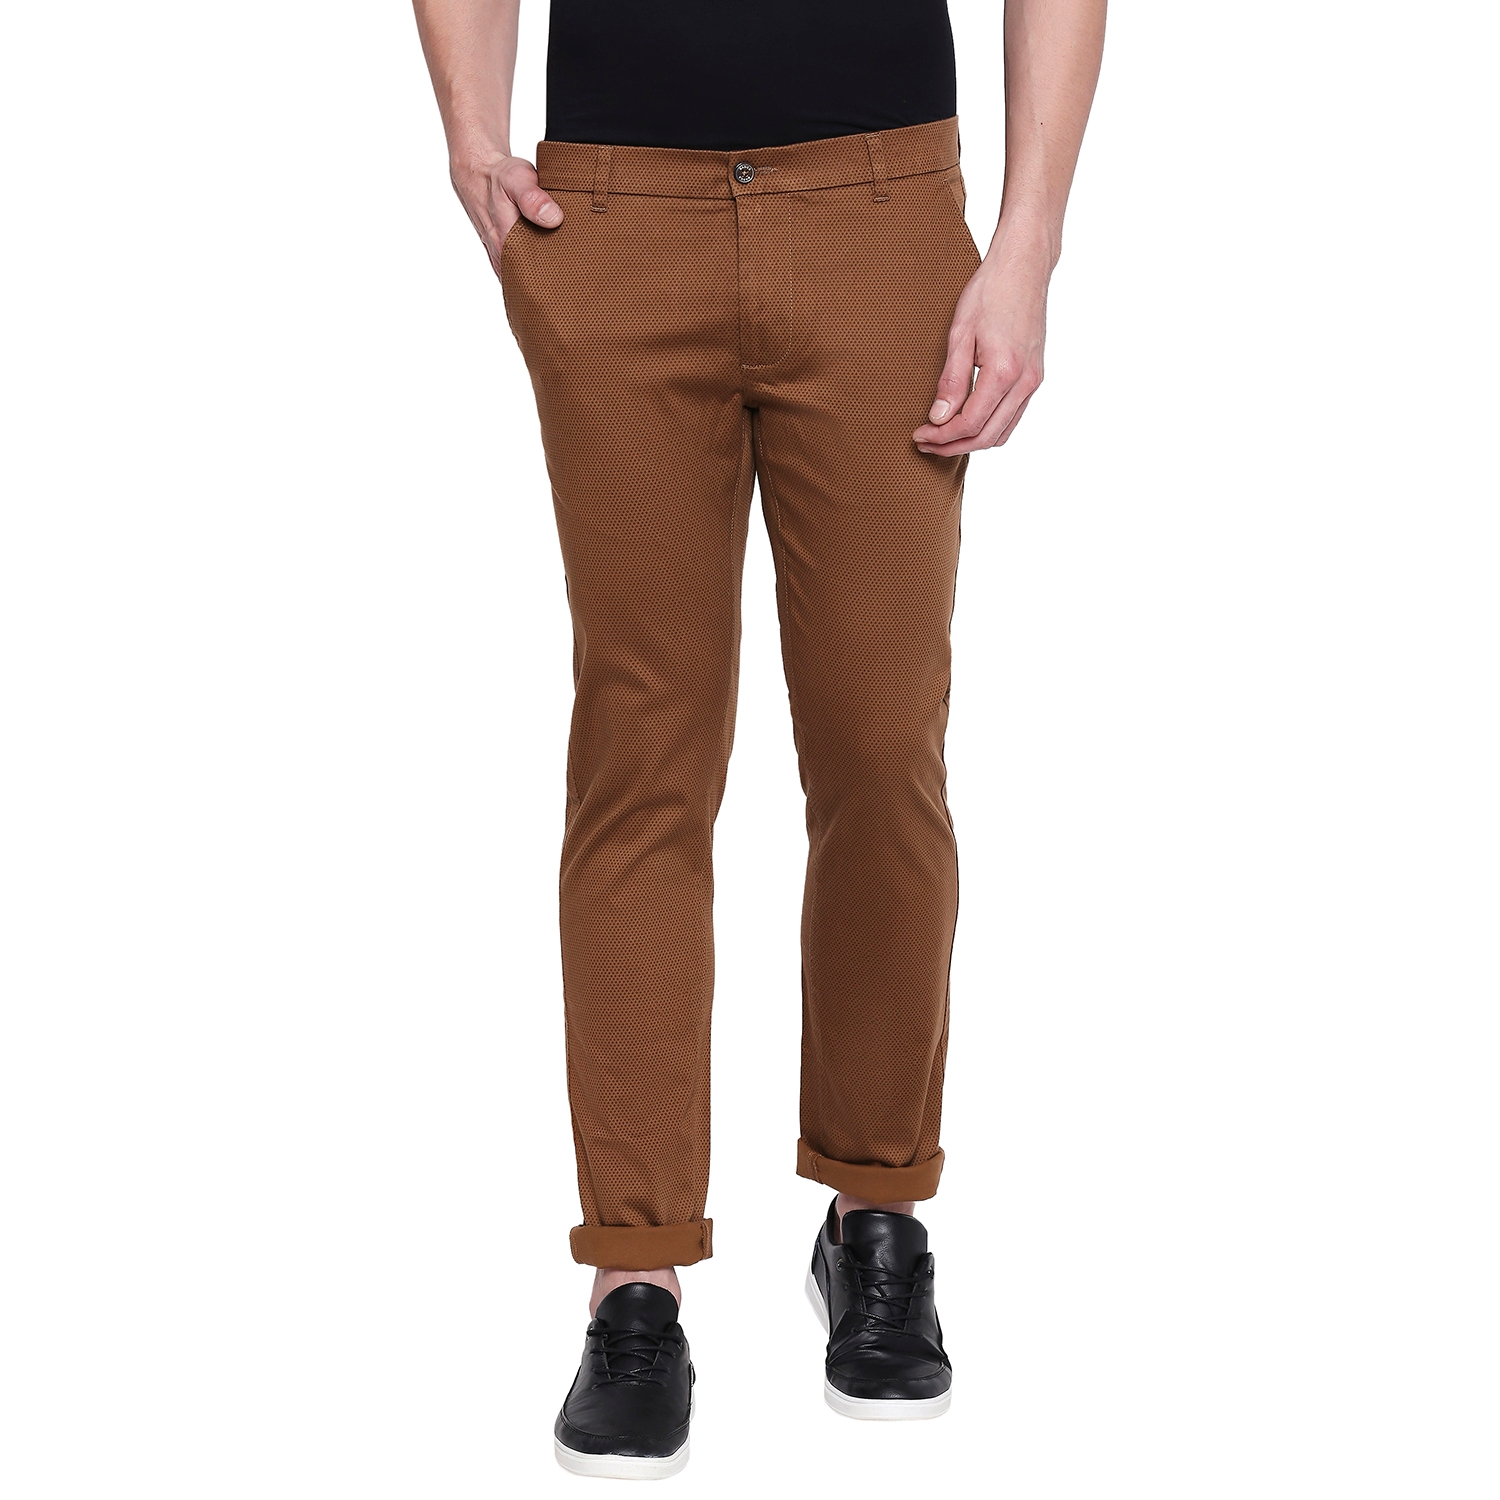 Basics | Men's Khaki Cotton Blend Printed Trouser 0